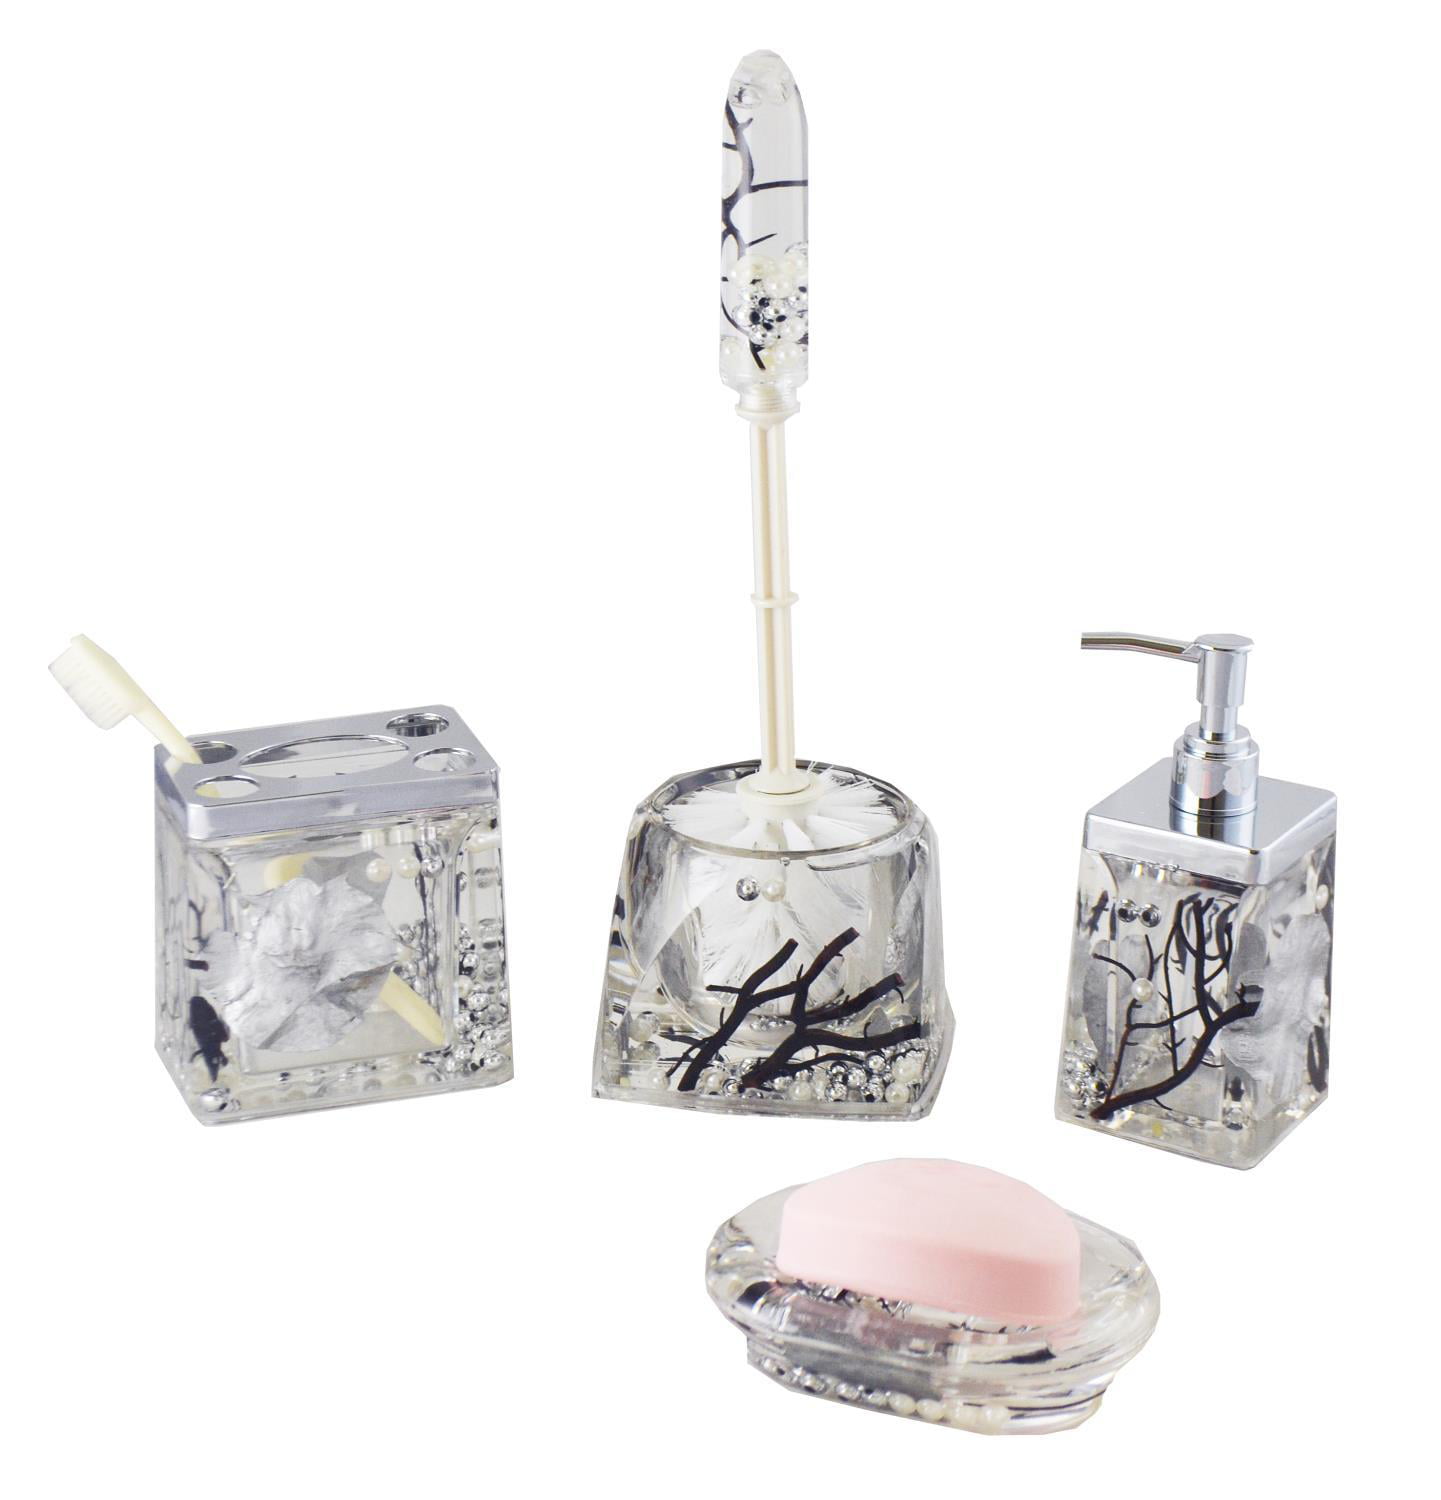 Golden Copper Flakes & Specks 5 Piece Chic Bathroom Vanity Accessories Gift Set 